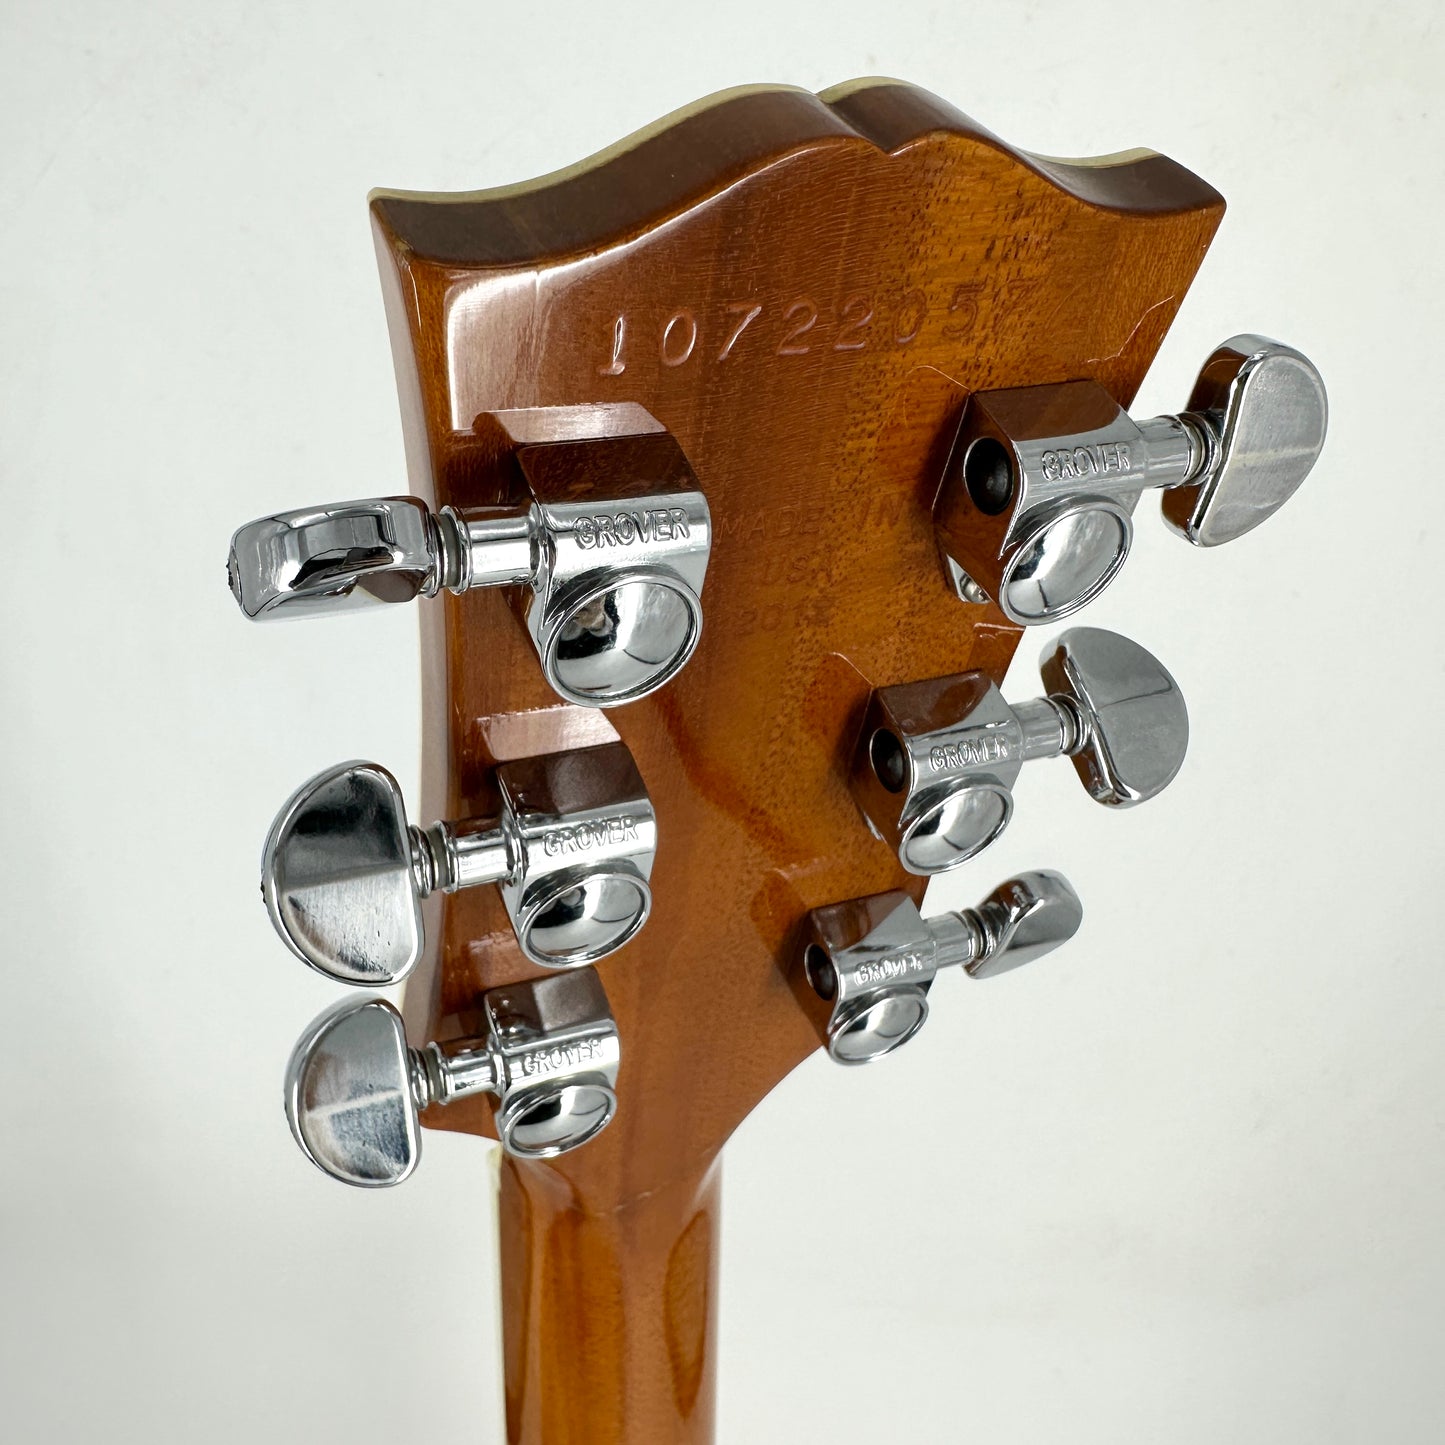 2012 Gibson Midtown Custom – Antique Natural